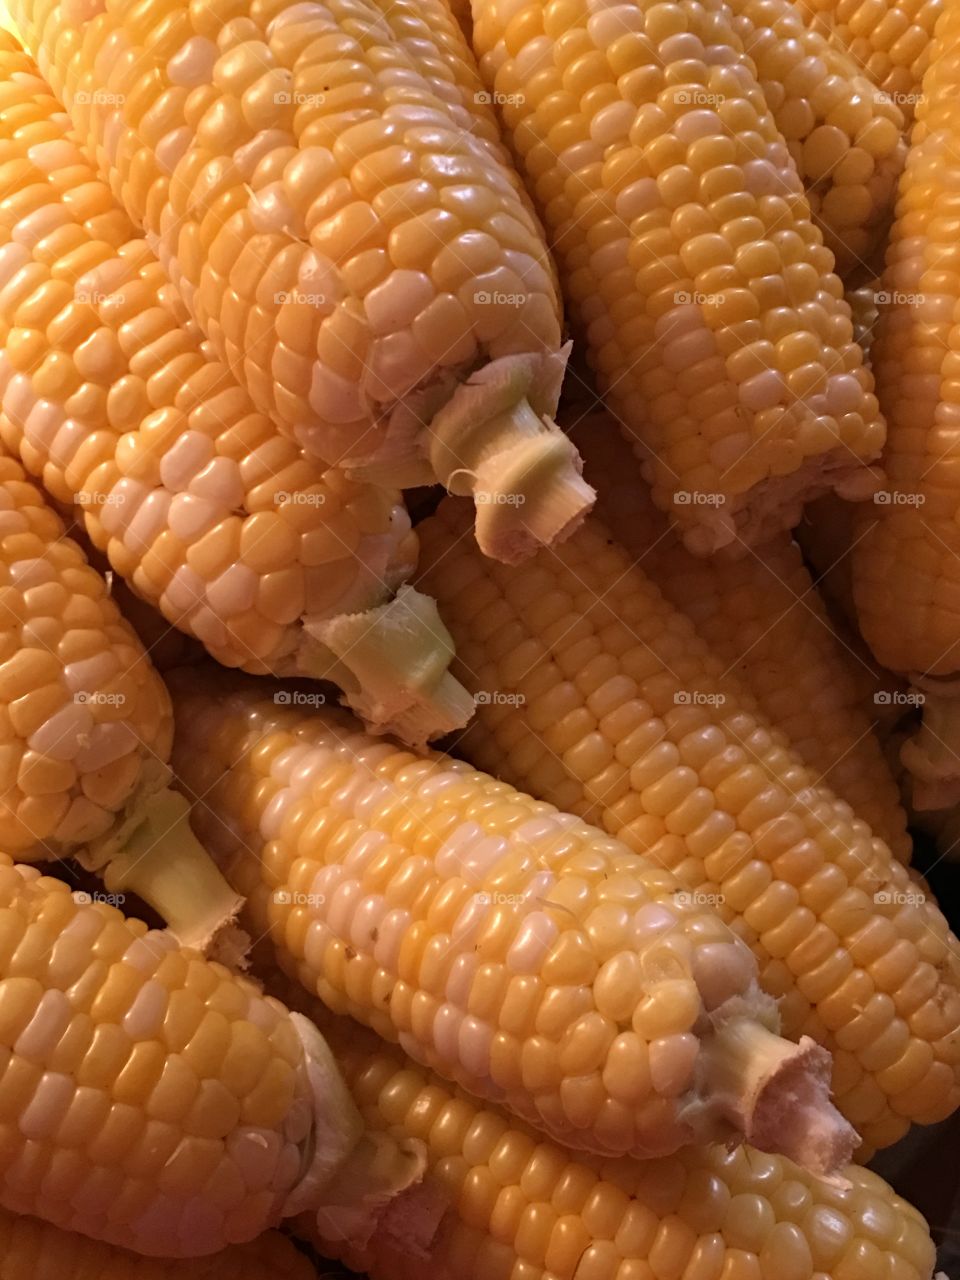 Corn for winter